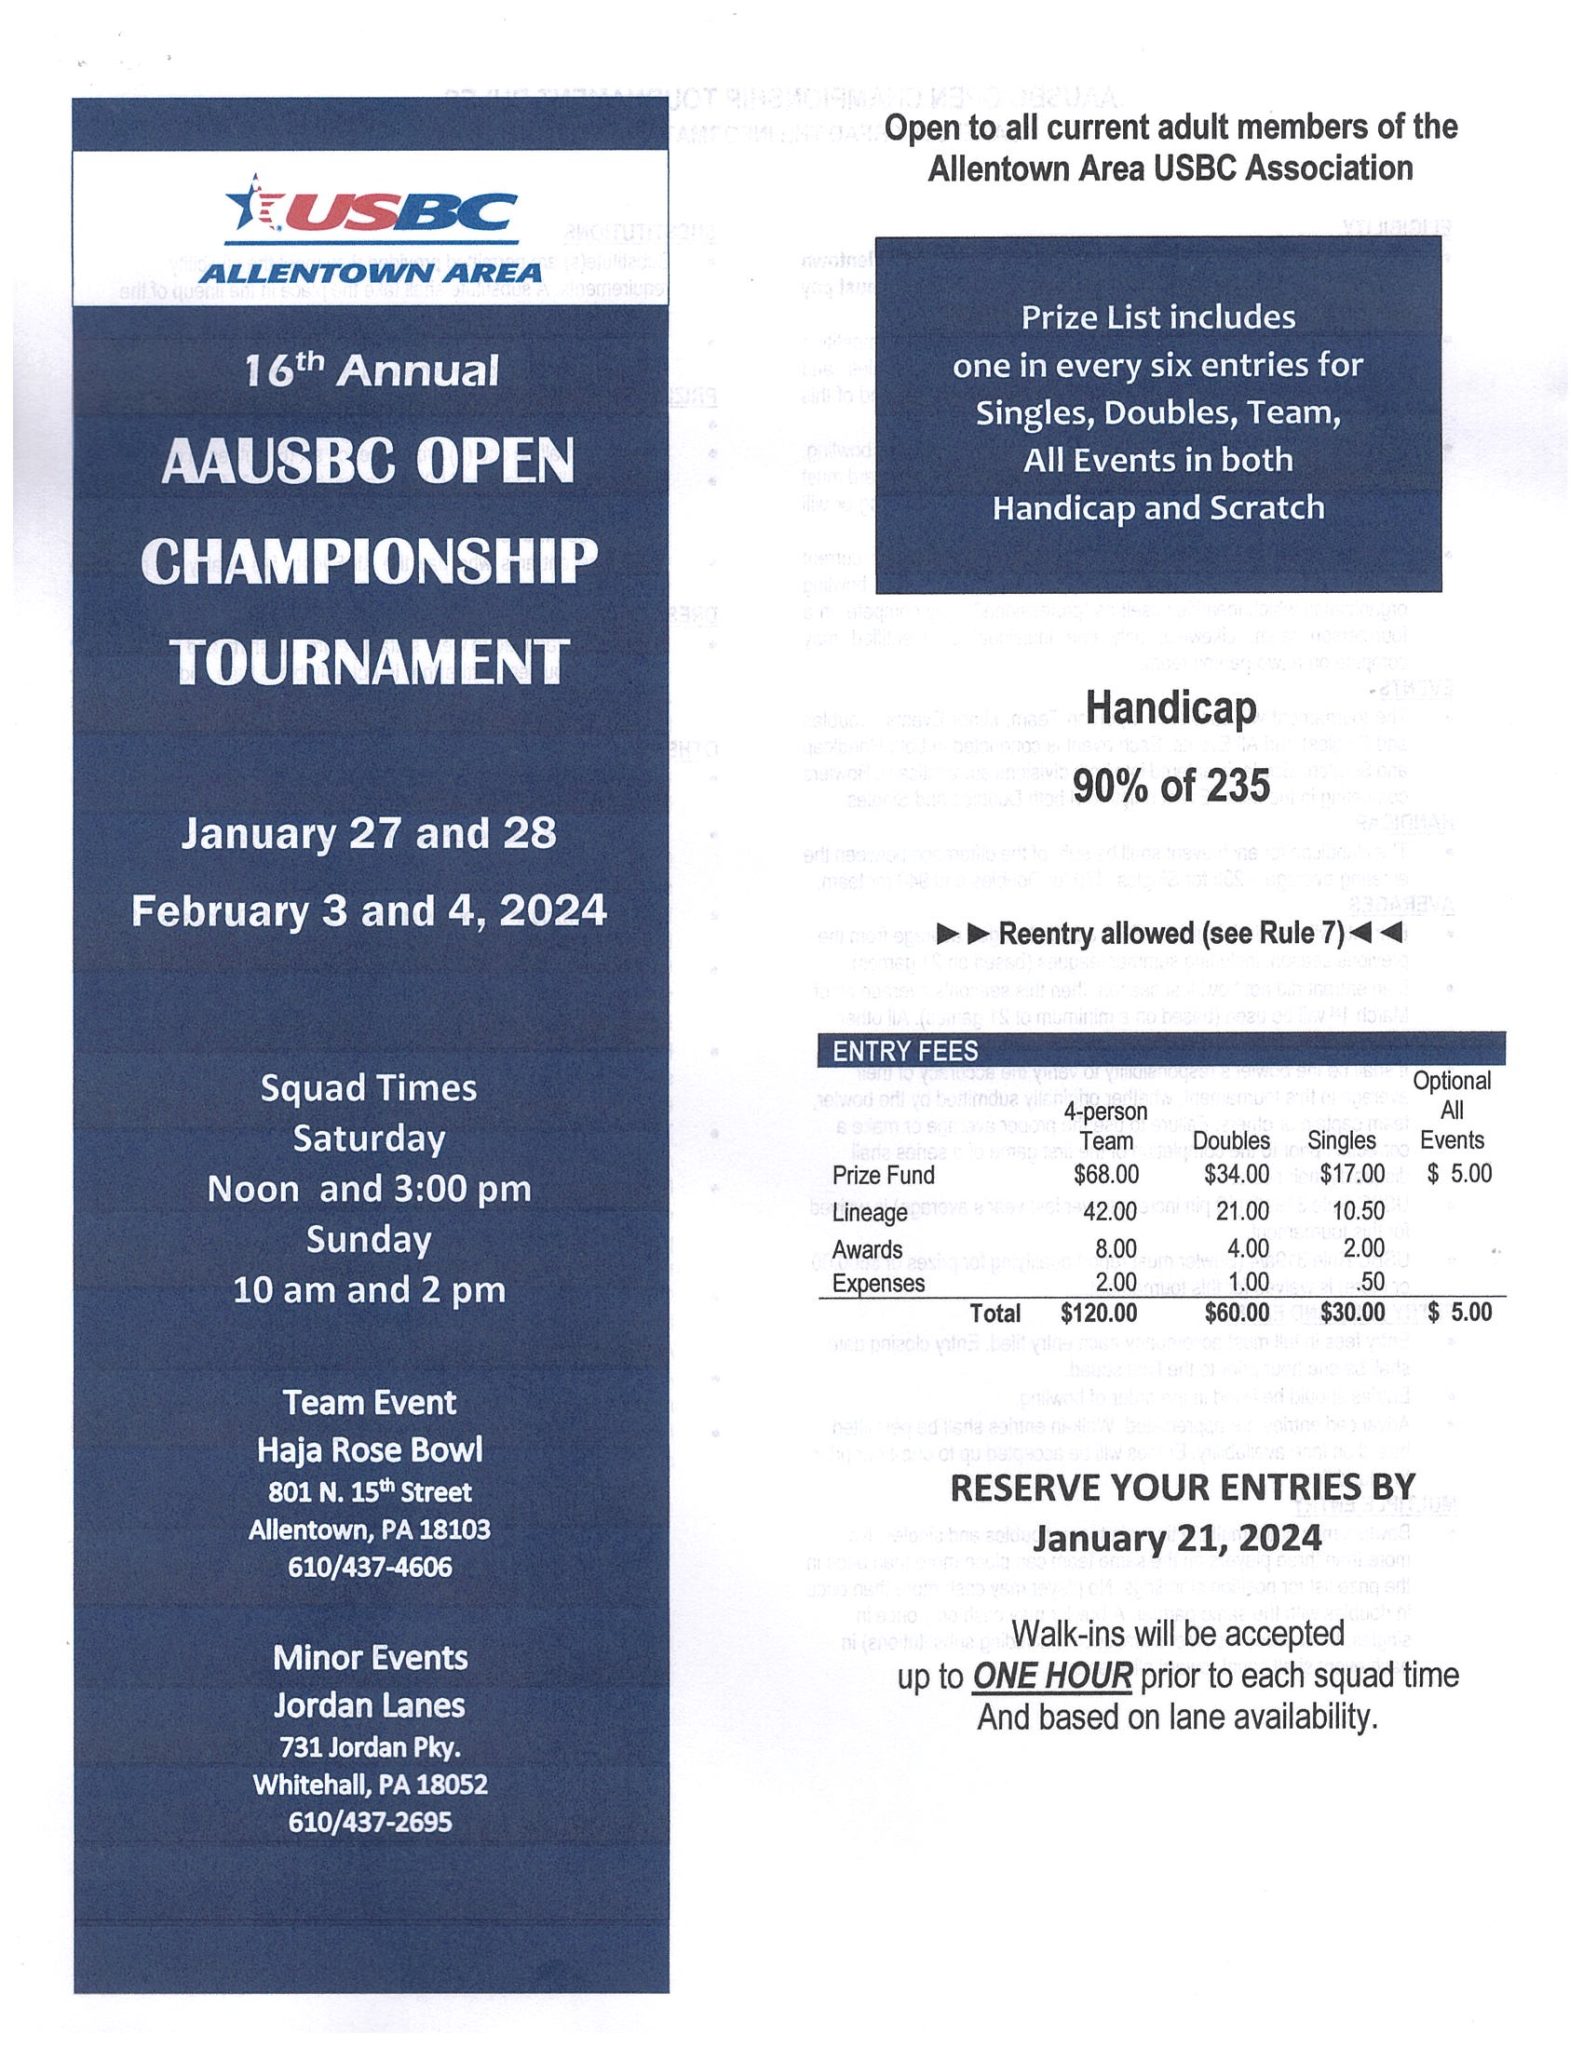 16th Annual AAUSBC Open Championship Tournament @ The New Jordan Lanes